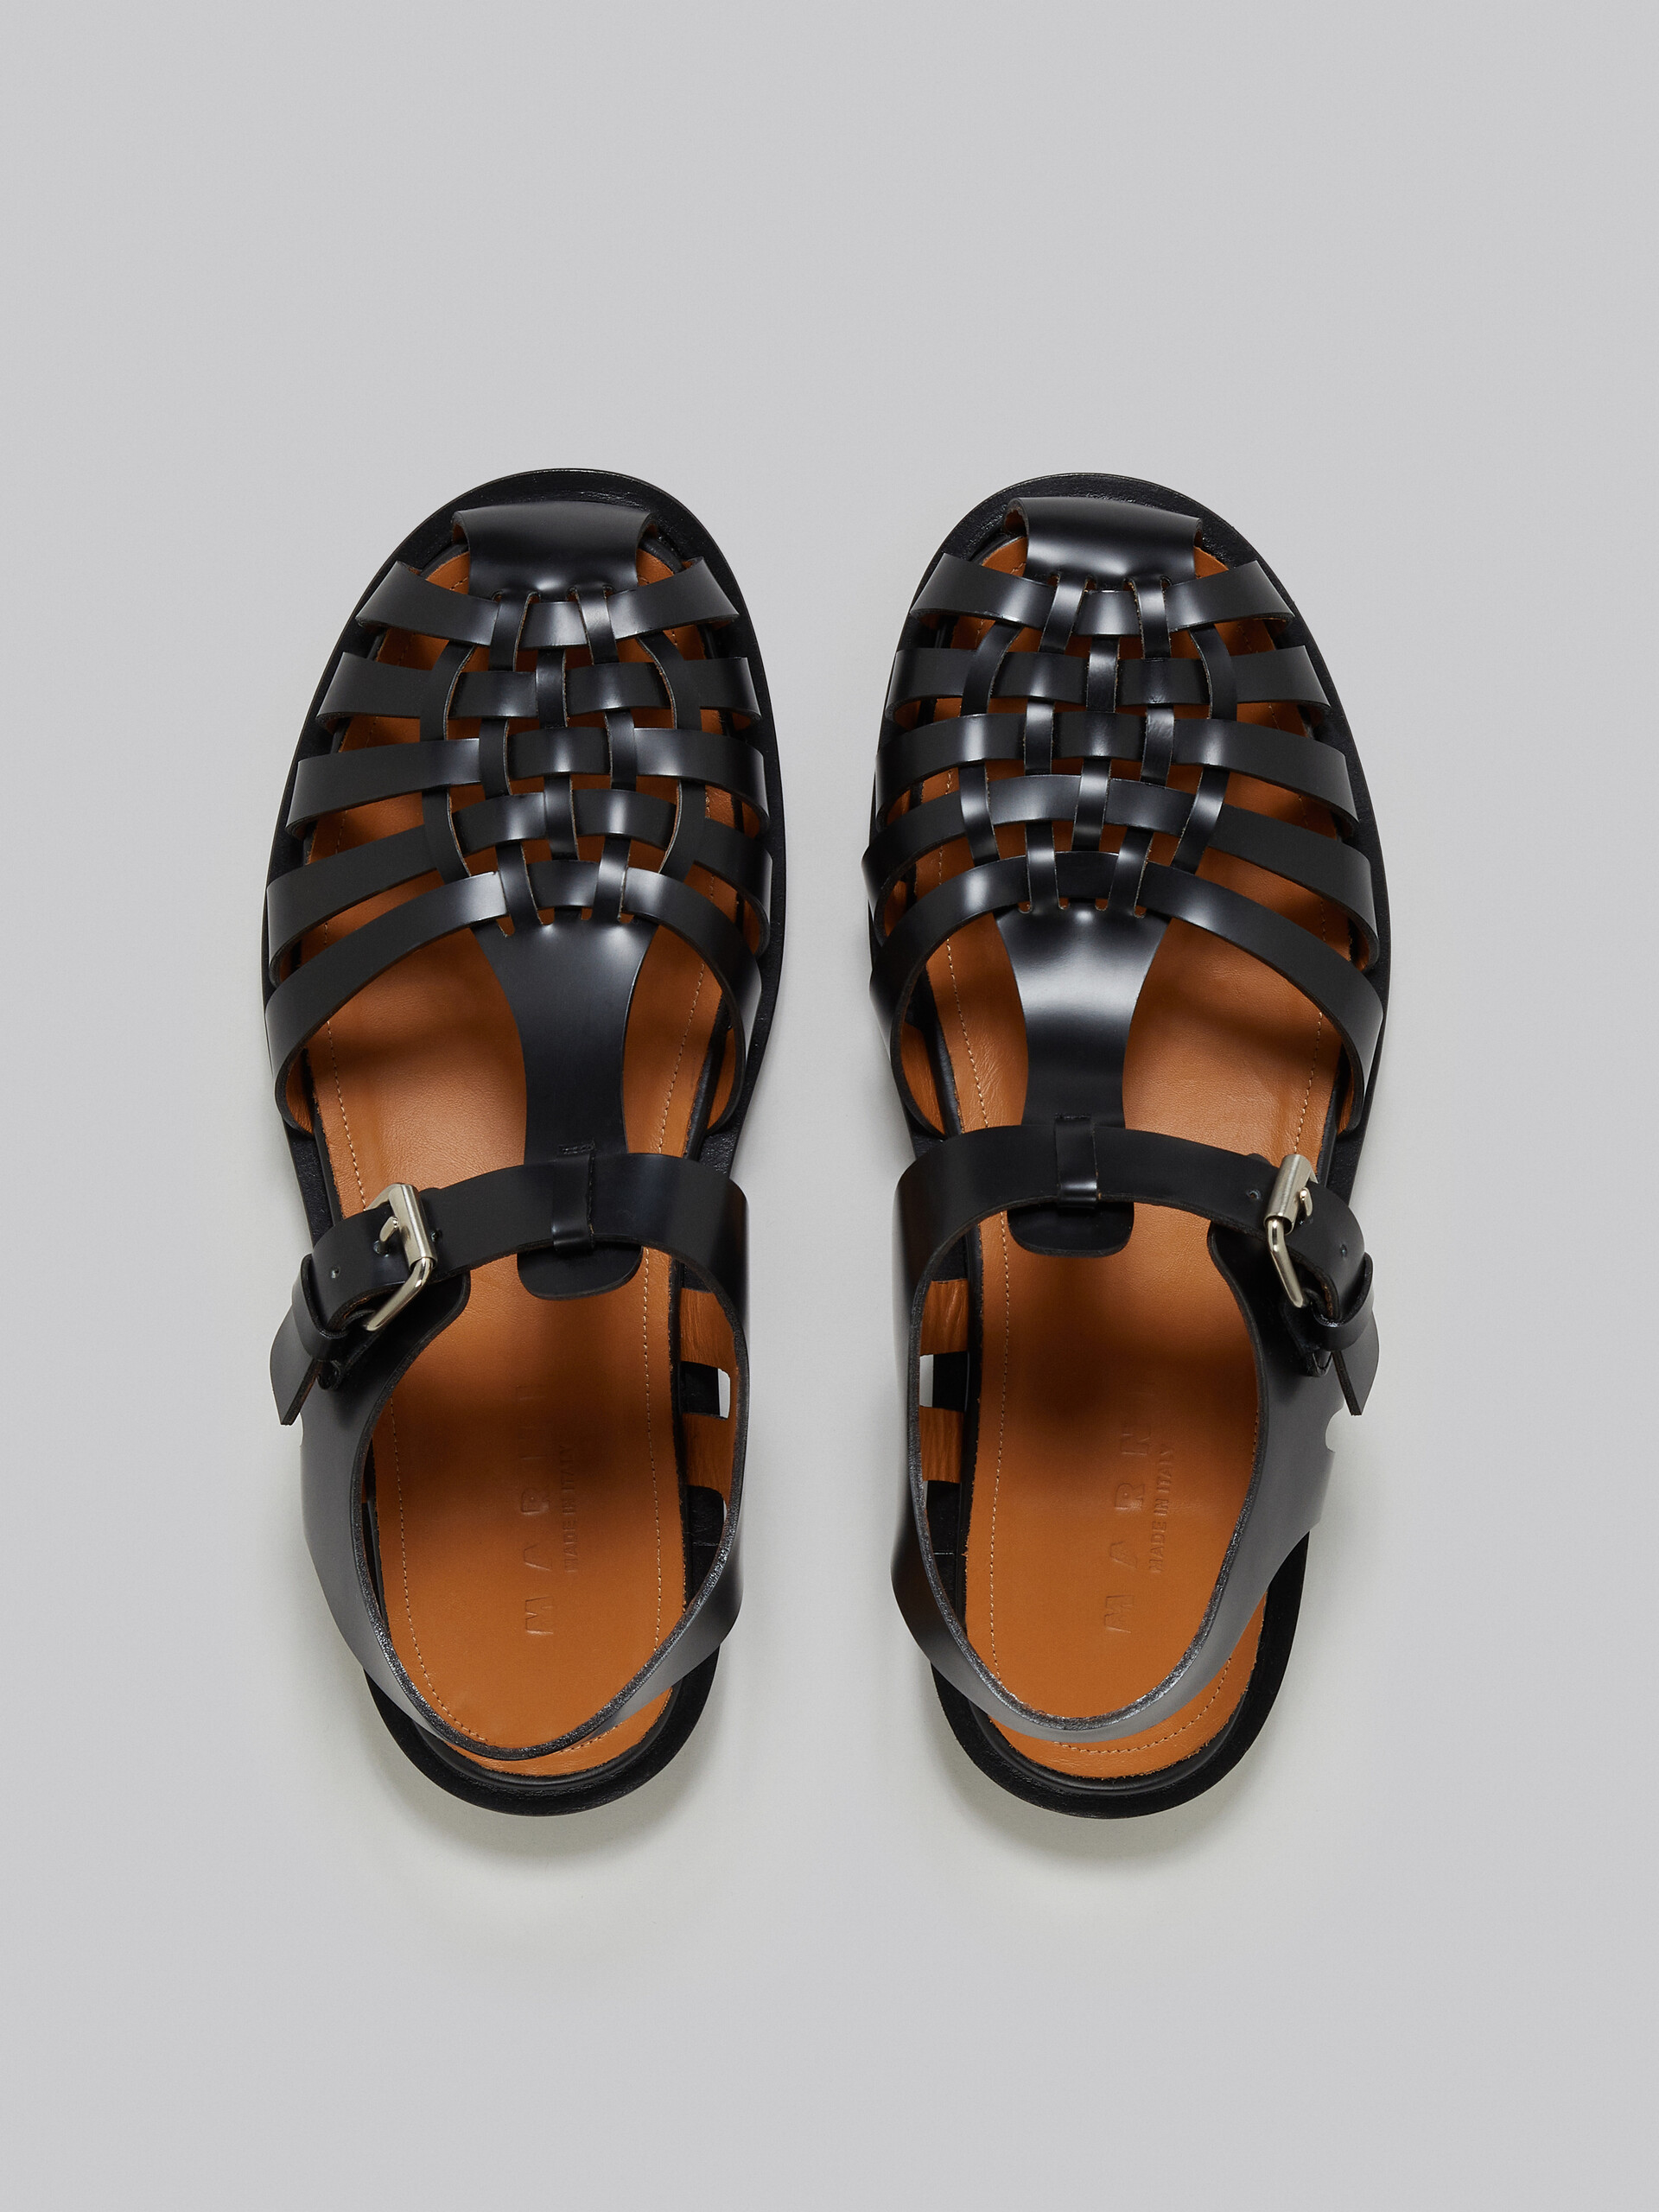 Black leather fisherman's sandal - Sandals - Image 4